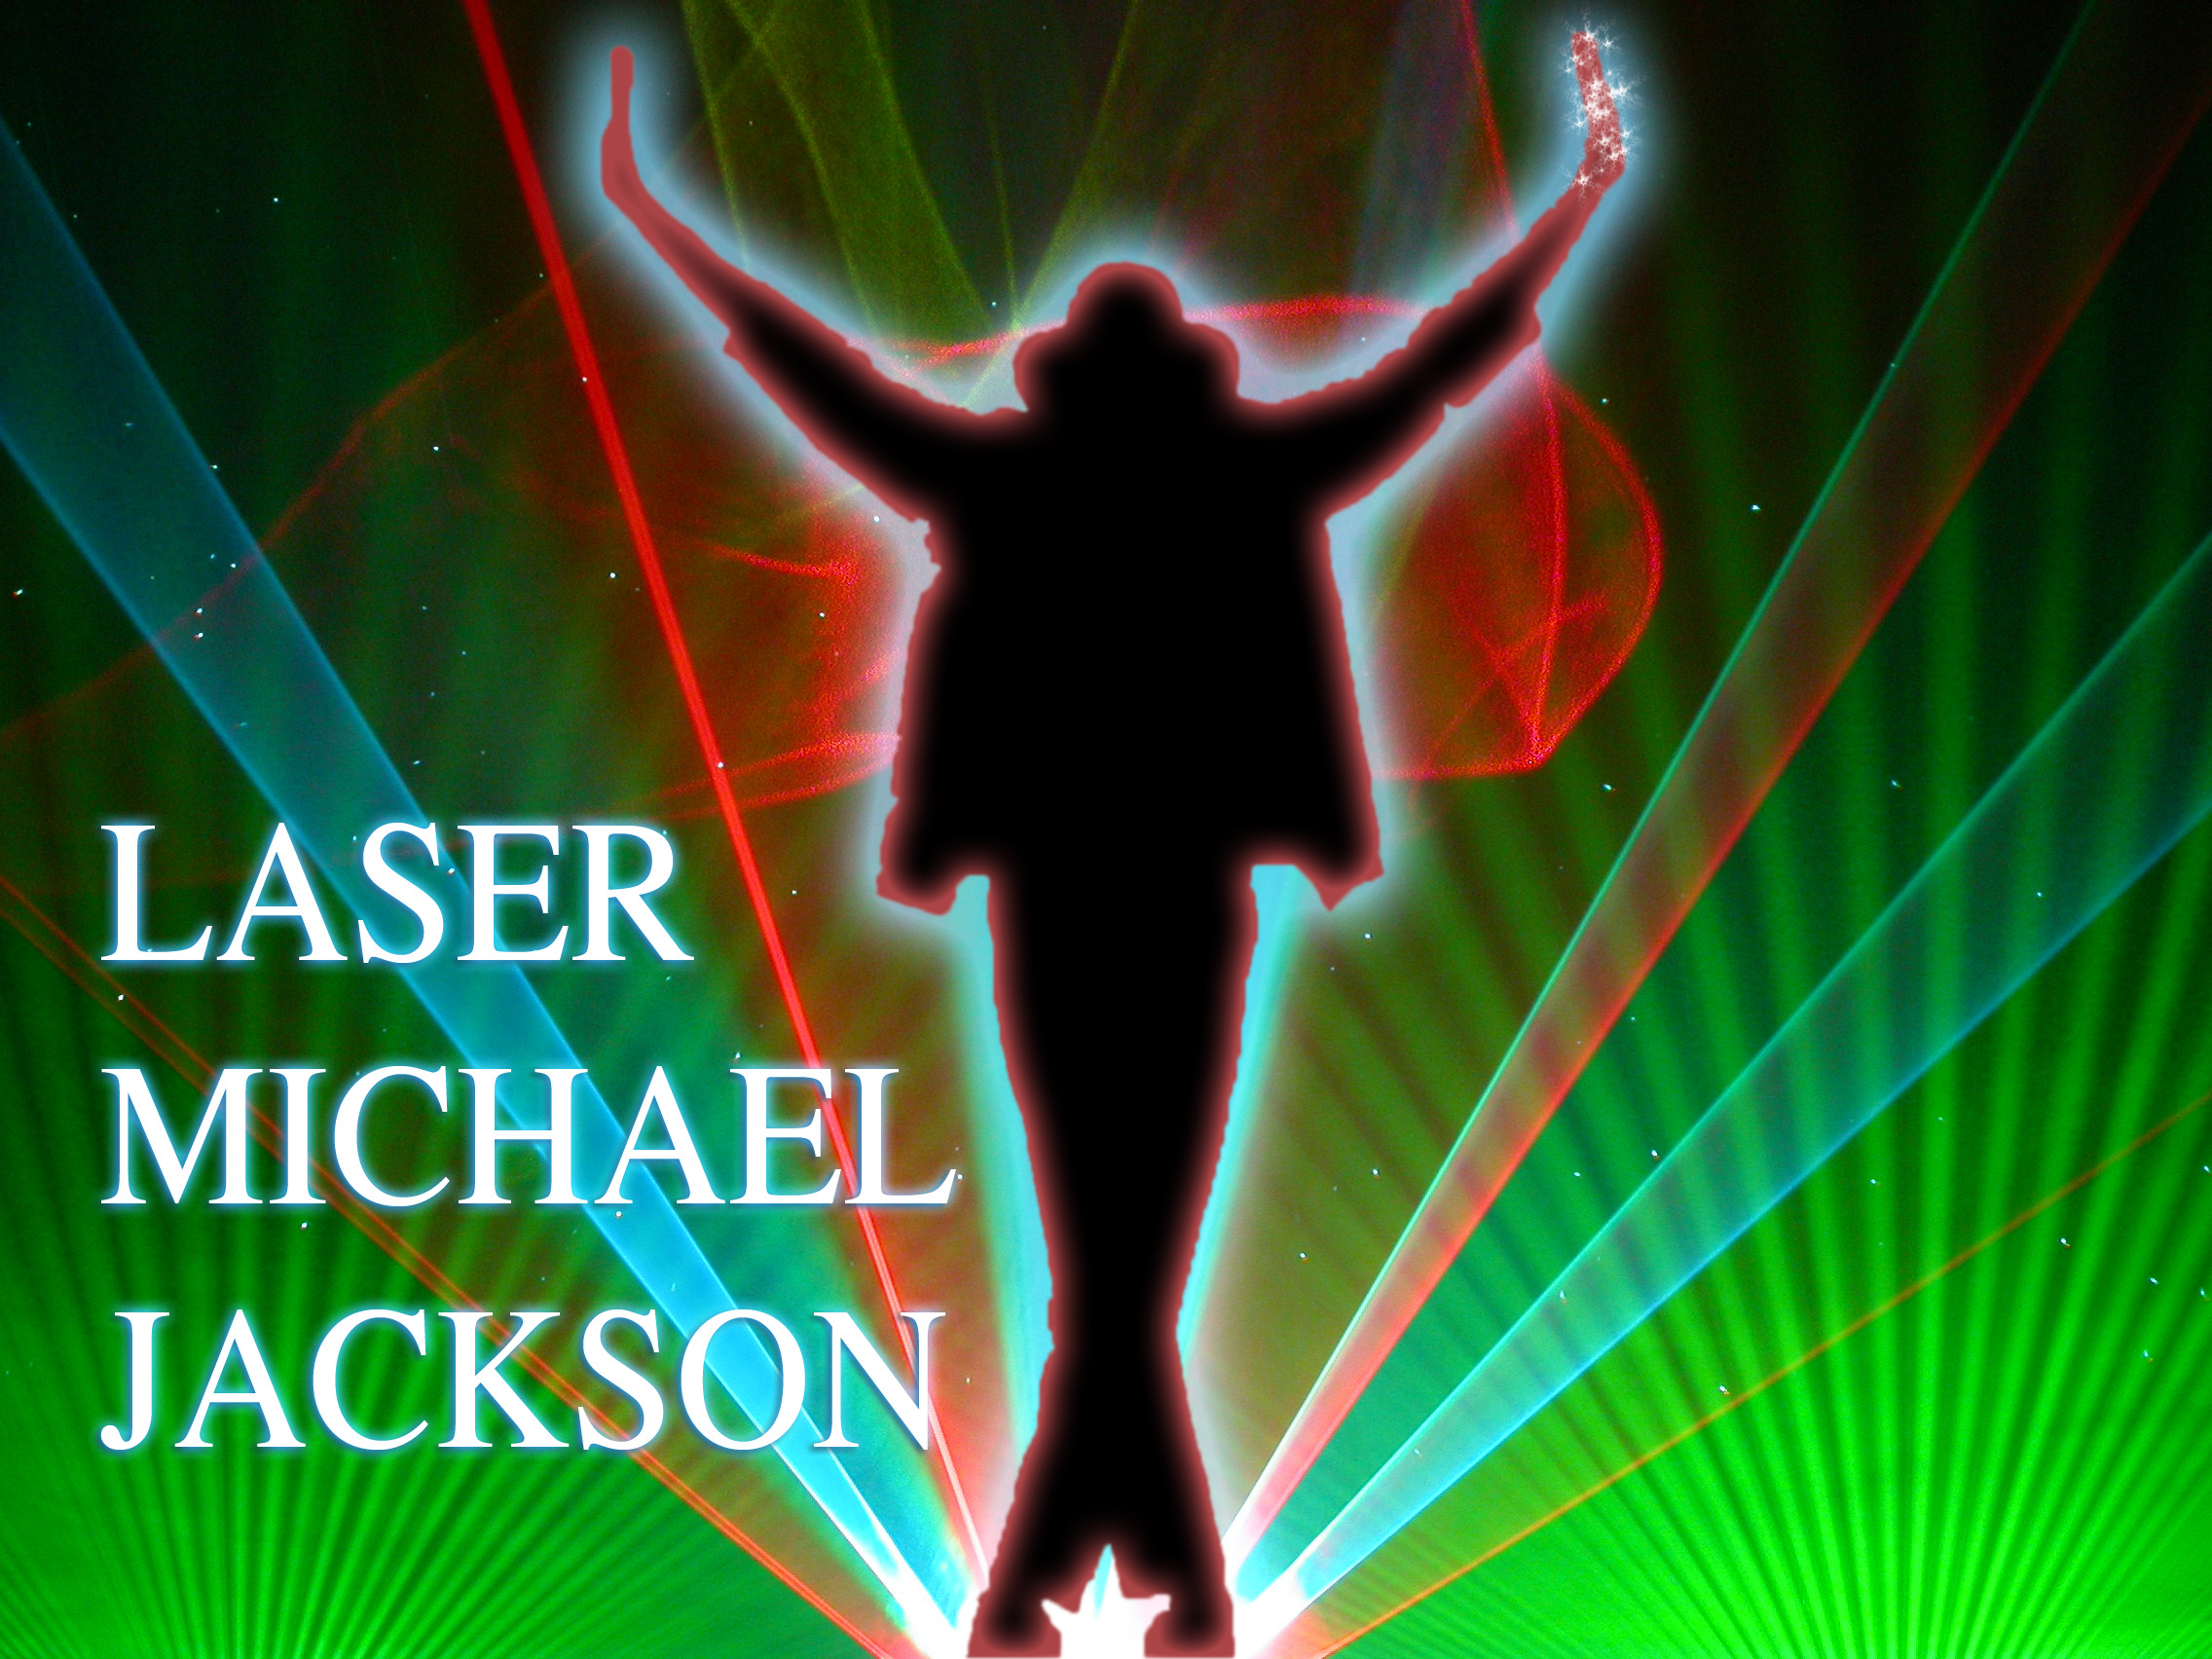  Laser Michael Jackson logo